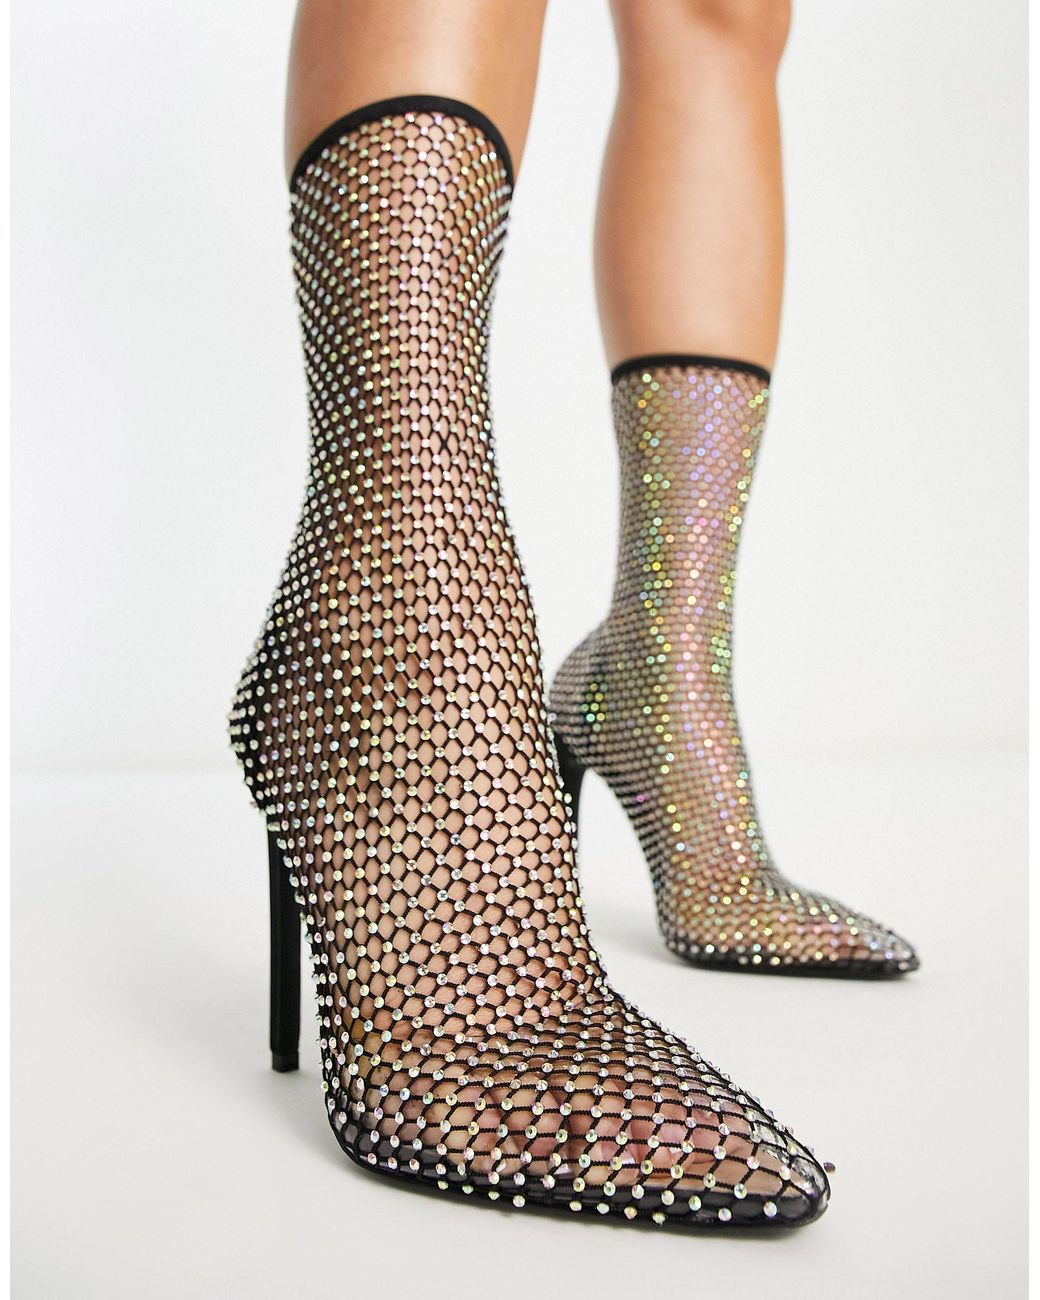 Simmi | Stefania Heeled Boots | Heeled Ankle Boots | SportsDirect.com